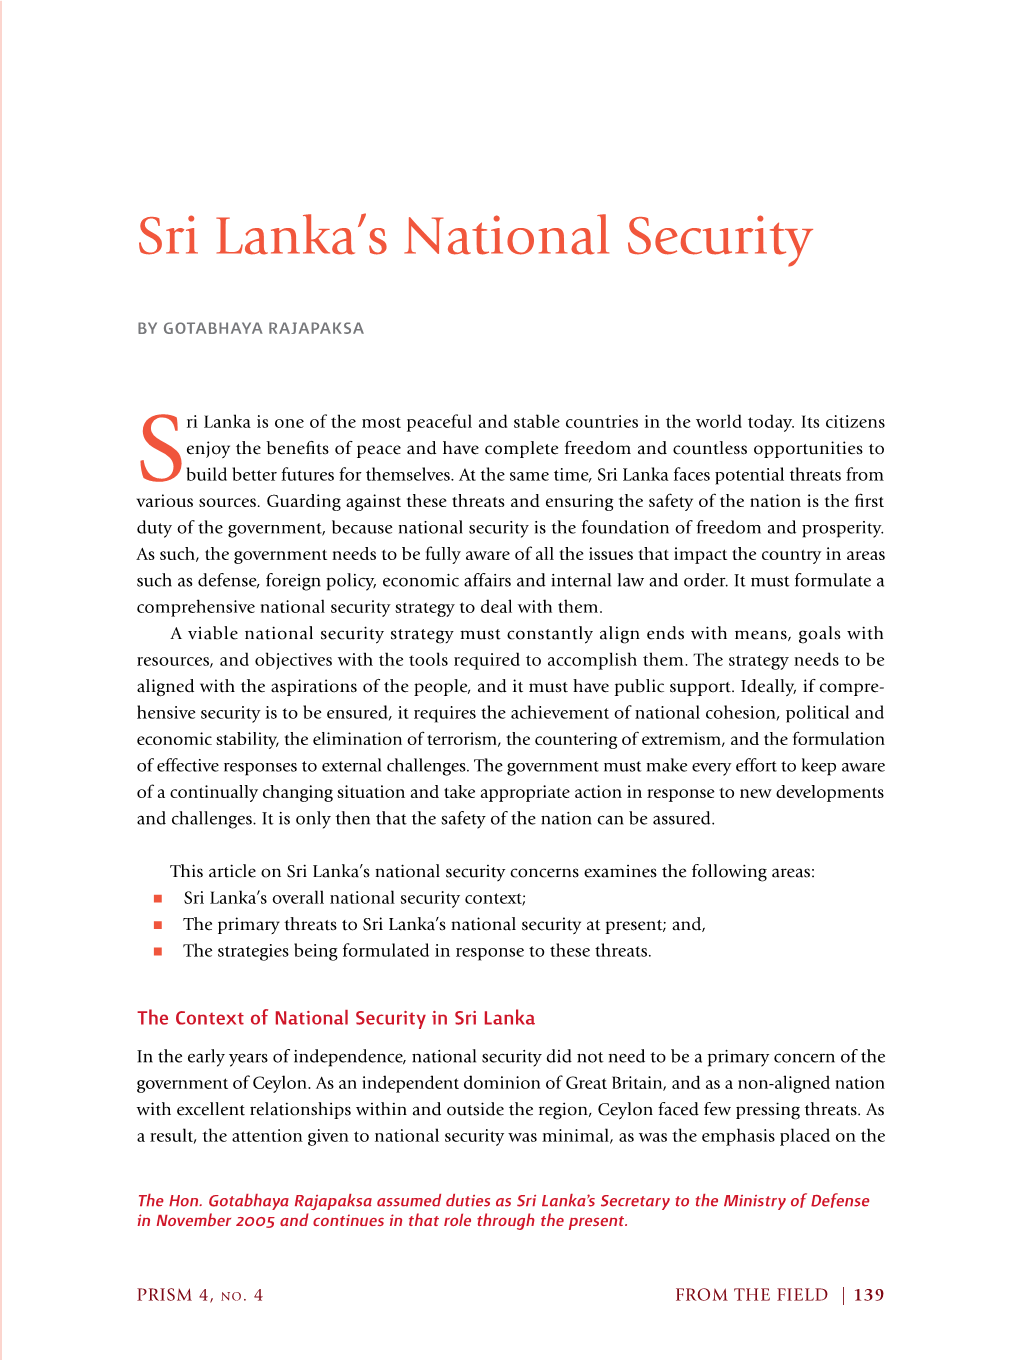 Sri Lanka's National Security